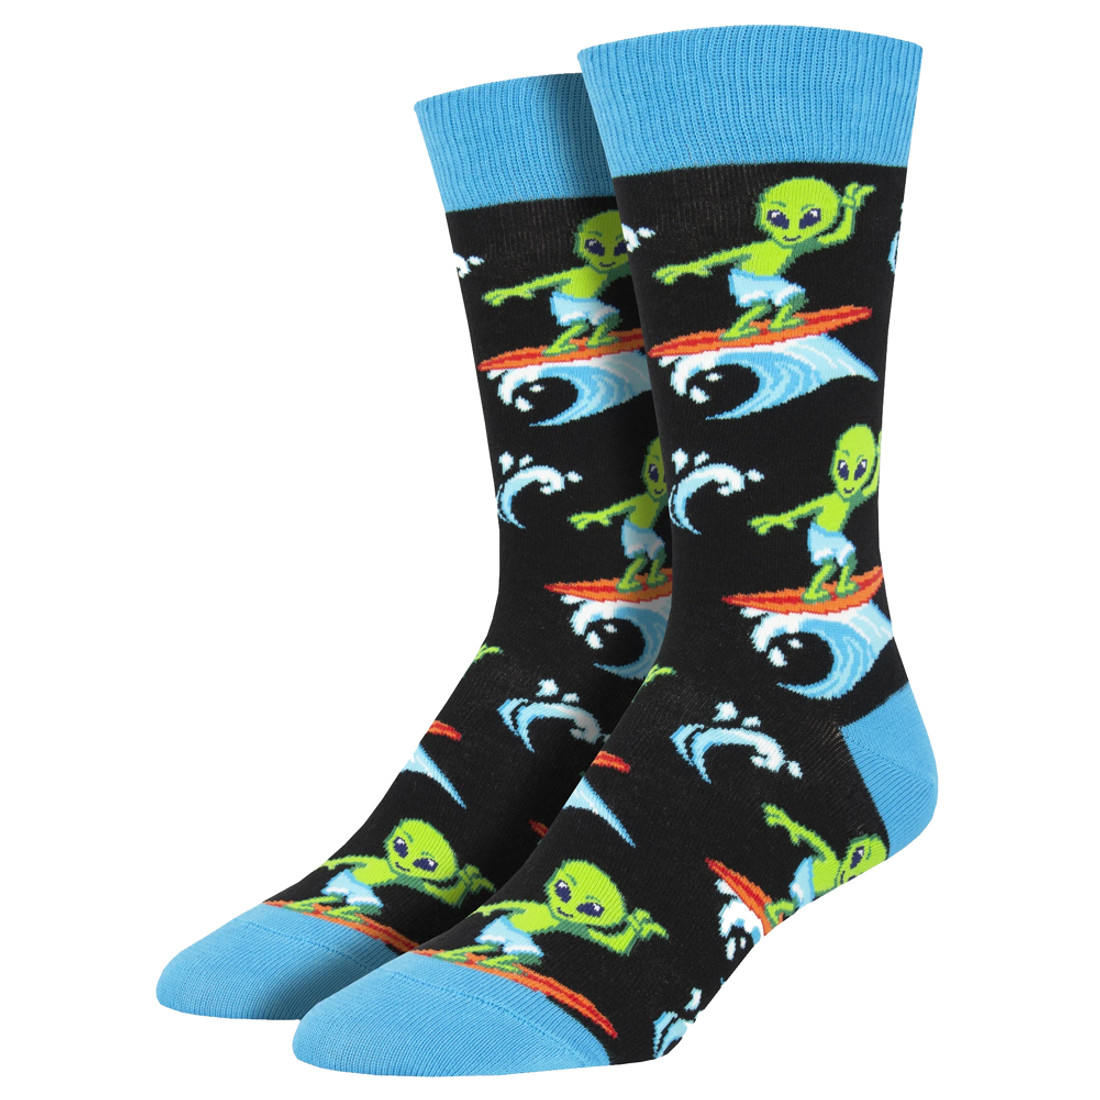 Surfing the Galaxy Alien Men's Crew Socks